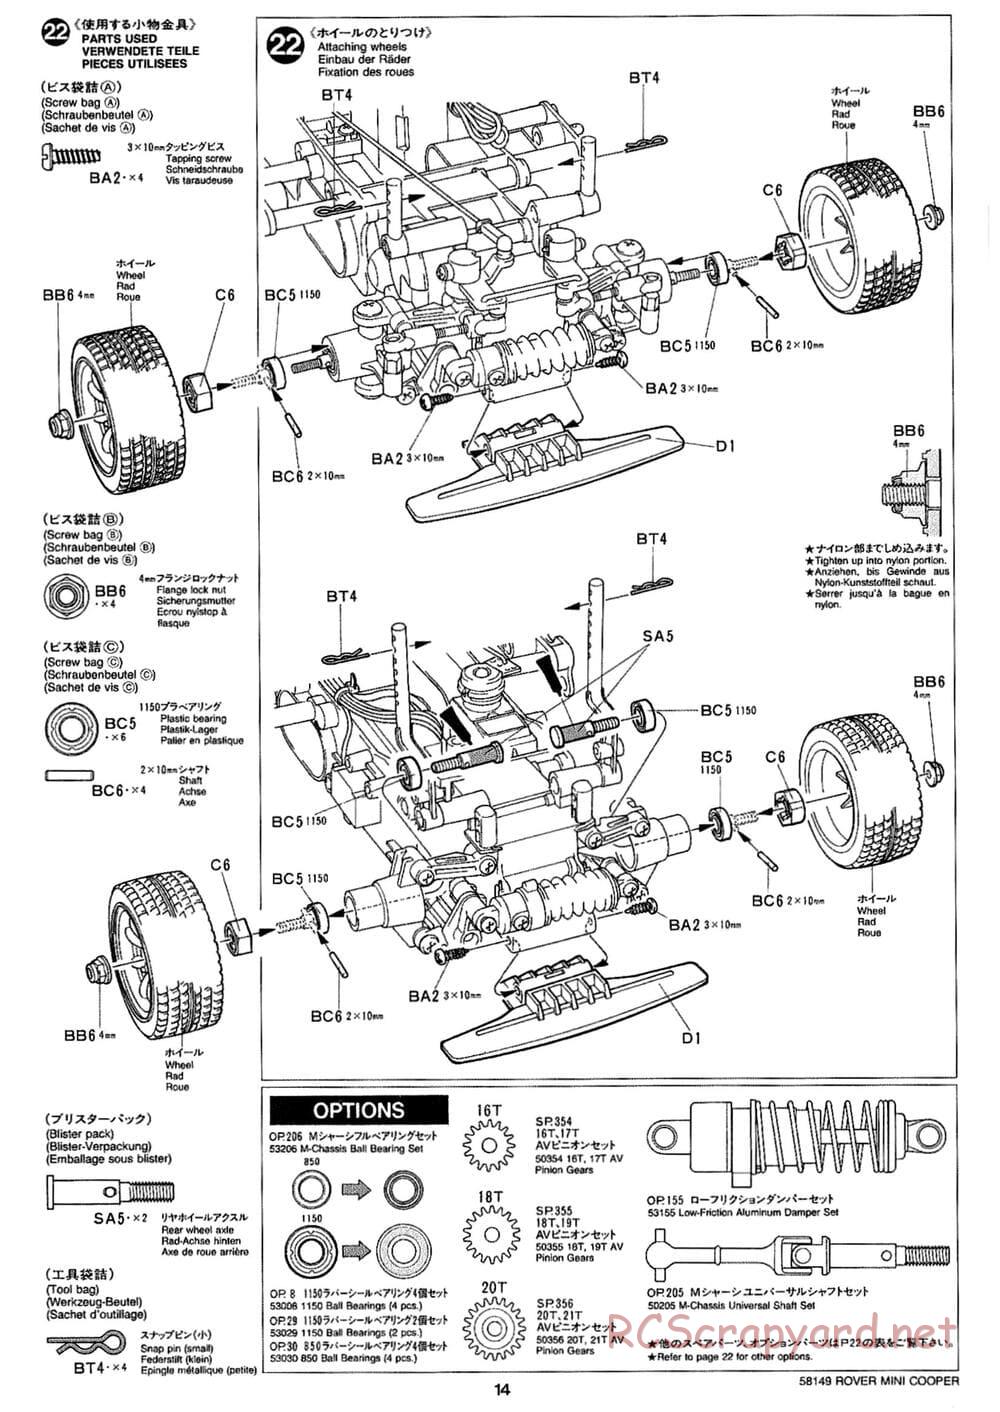 Tamiya - Rover Mini Cooper - M01 Chassis - Manual - Page 14